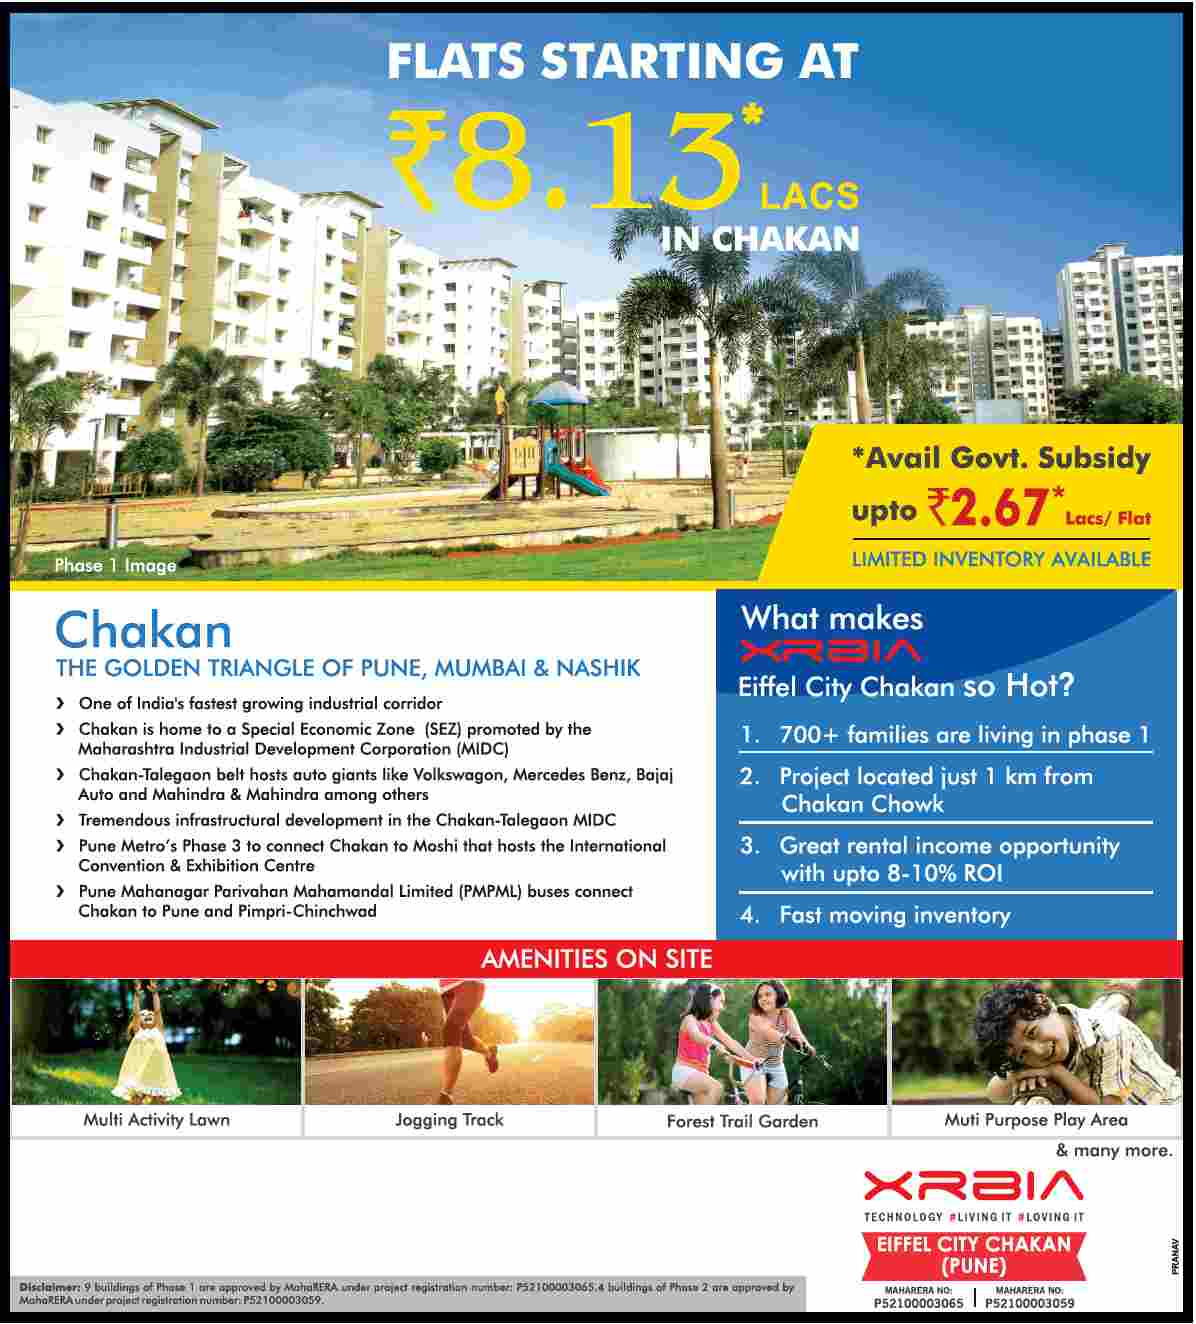 Xrbia Chakan the golden triangle of Pune, Mumbai & Nashik